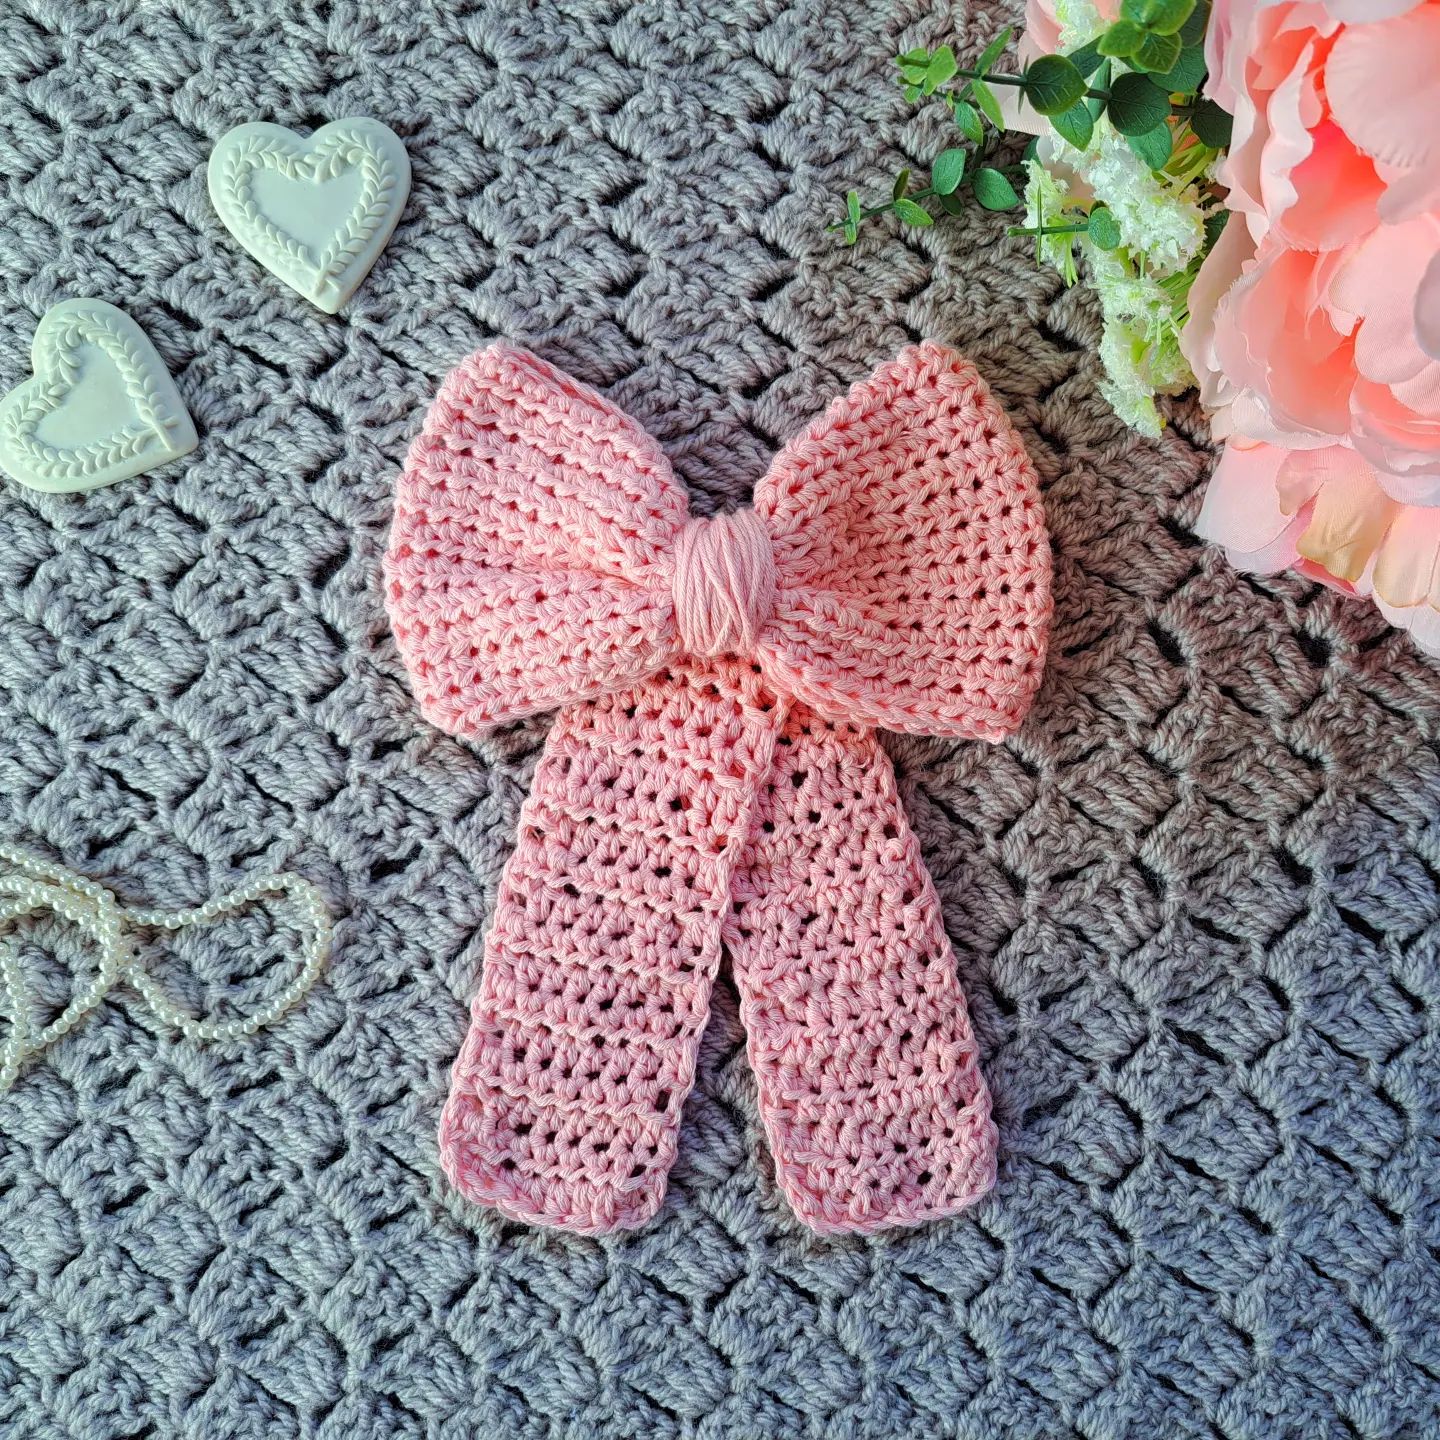 Crochet A Perfectly Pretty Pocket Shawl by Selina Veronique Crochet